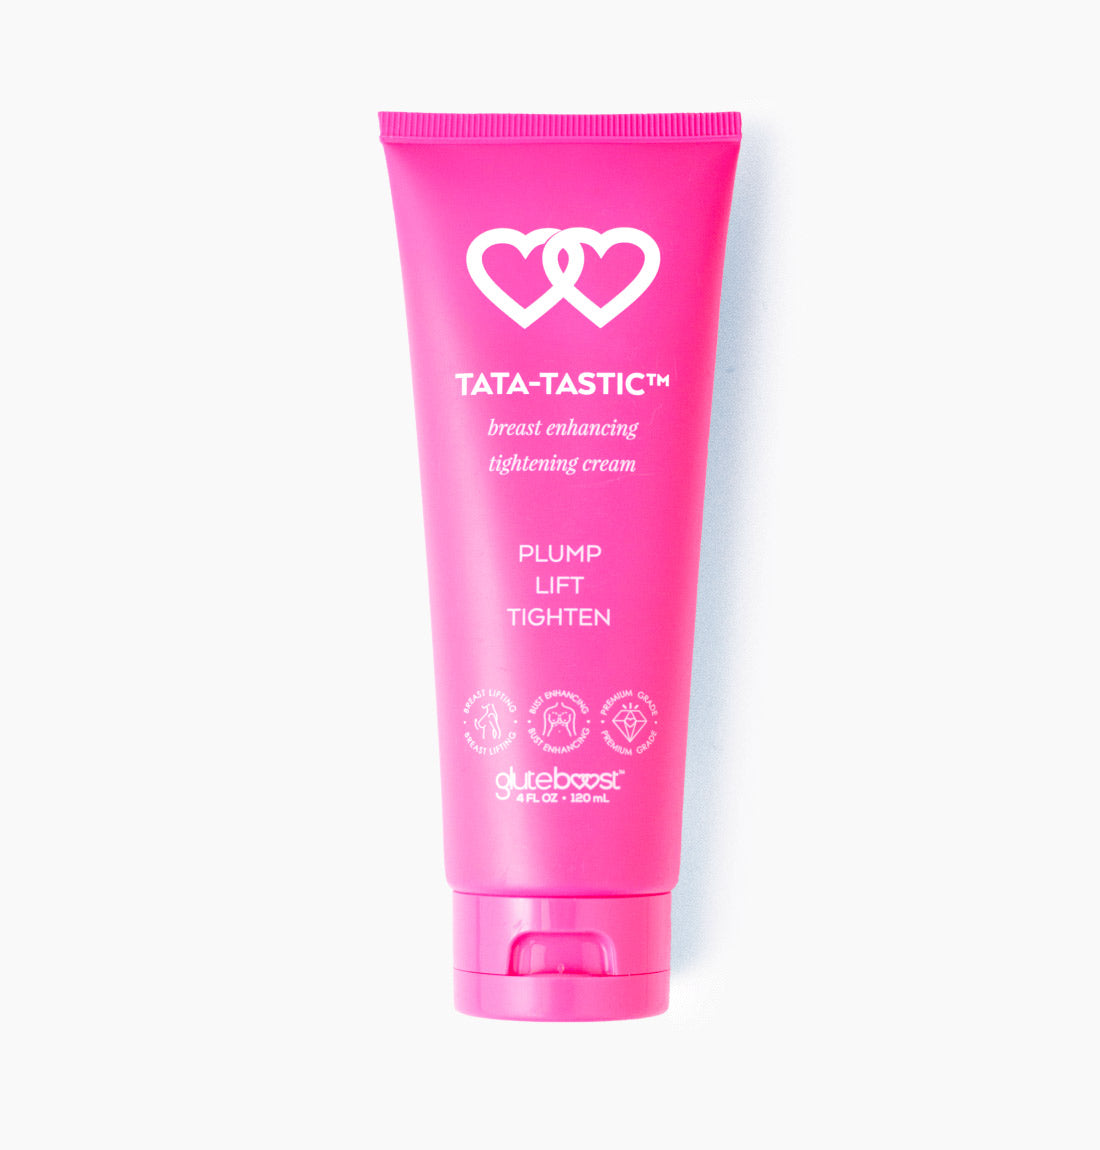 Tata-Tastic™ Breast Cream